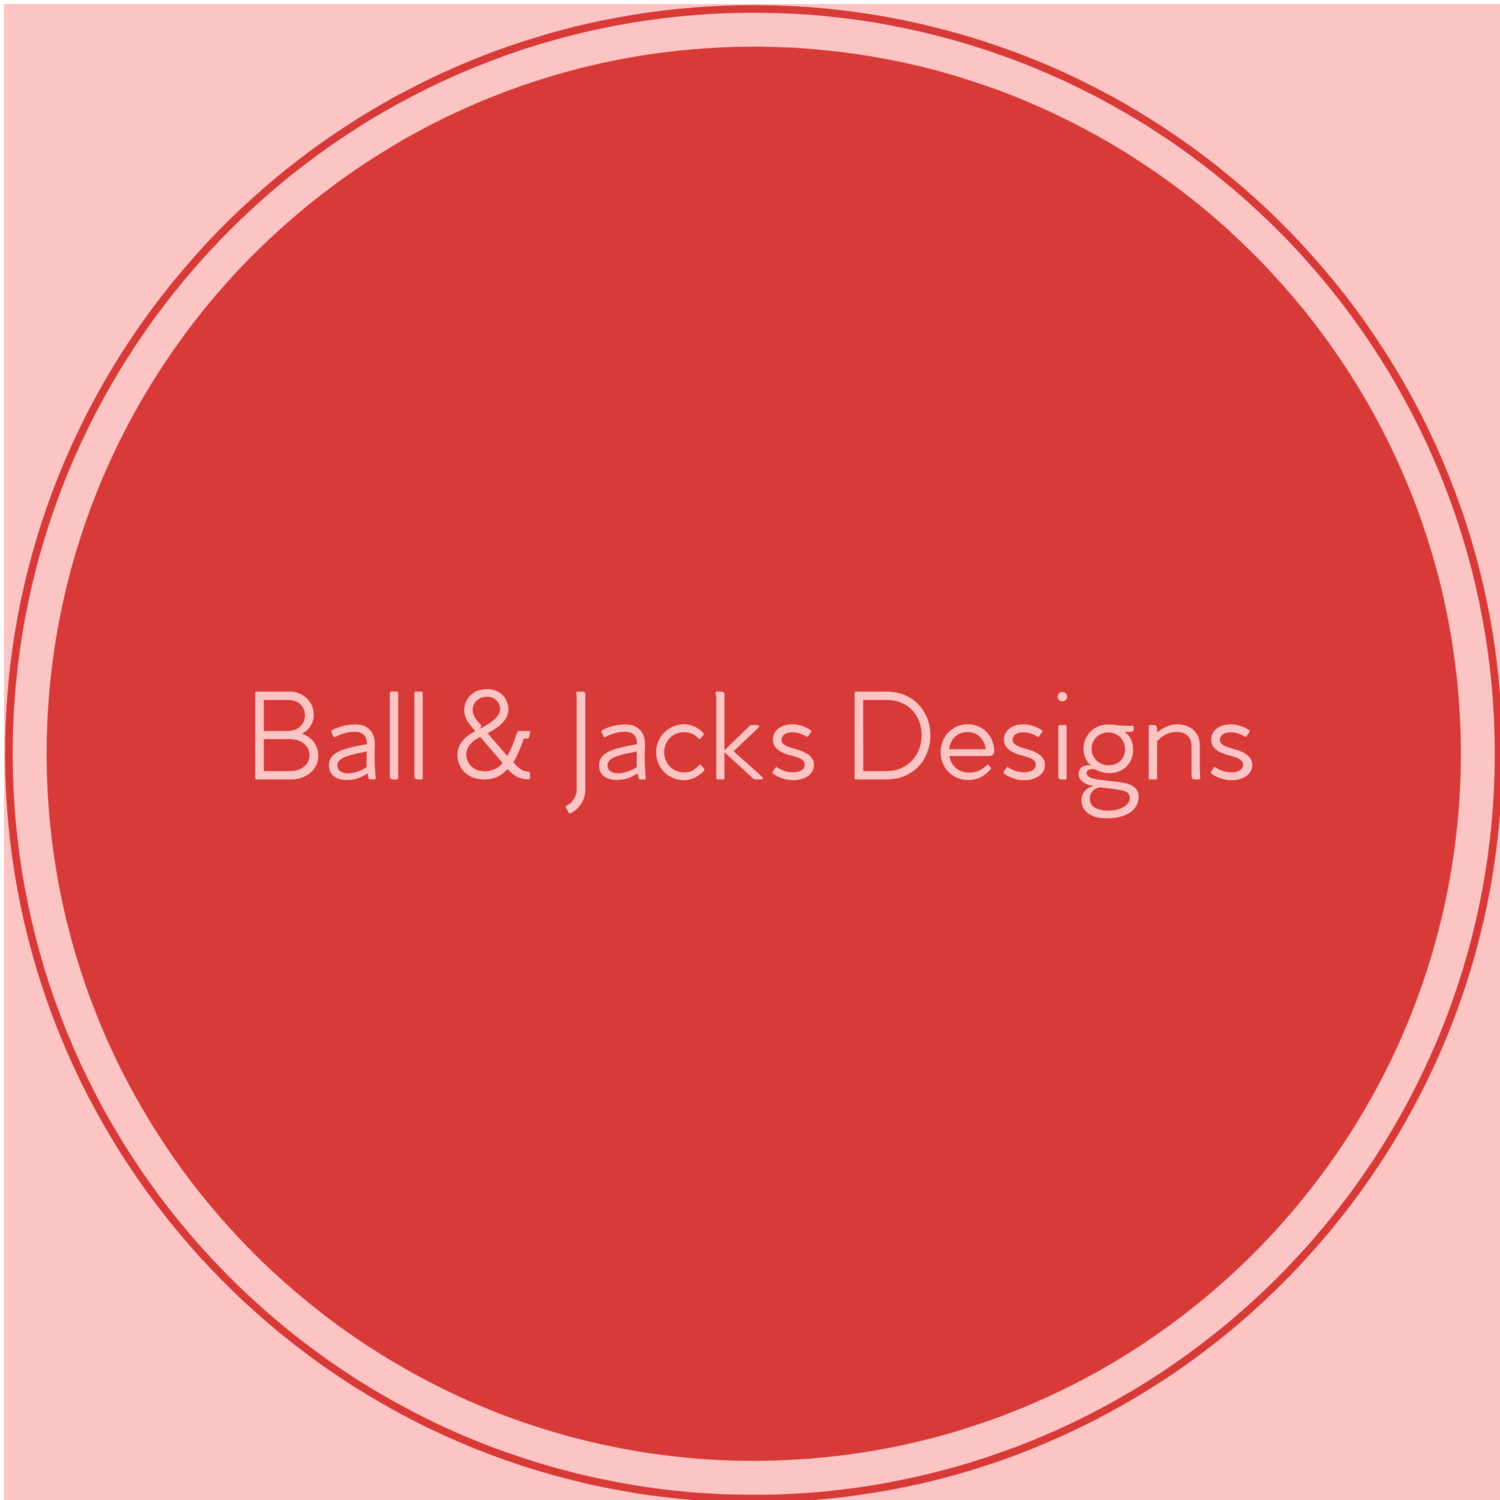  Ball & Jacks Designs